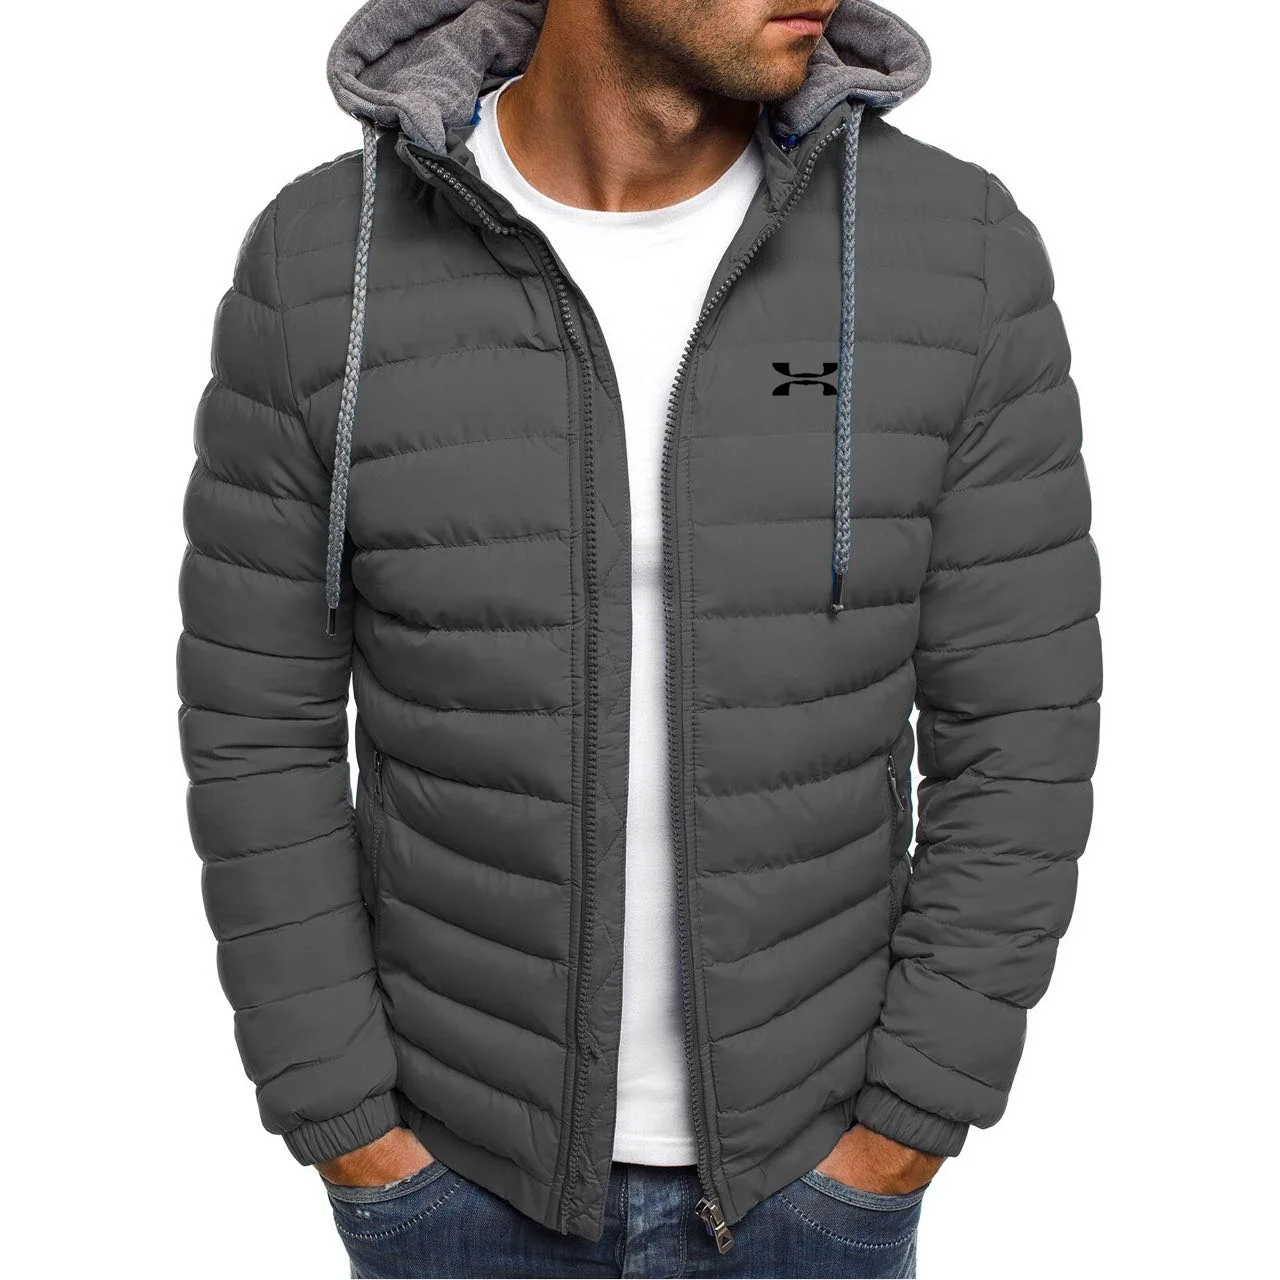 

Winter Hooded Jacket Men's Warm Down Jacket Street Fashion Casual Brand Outer Men's Parka Coat